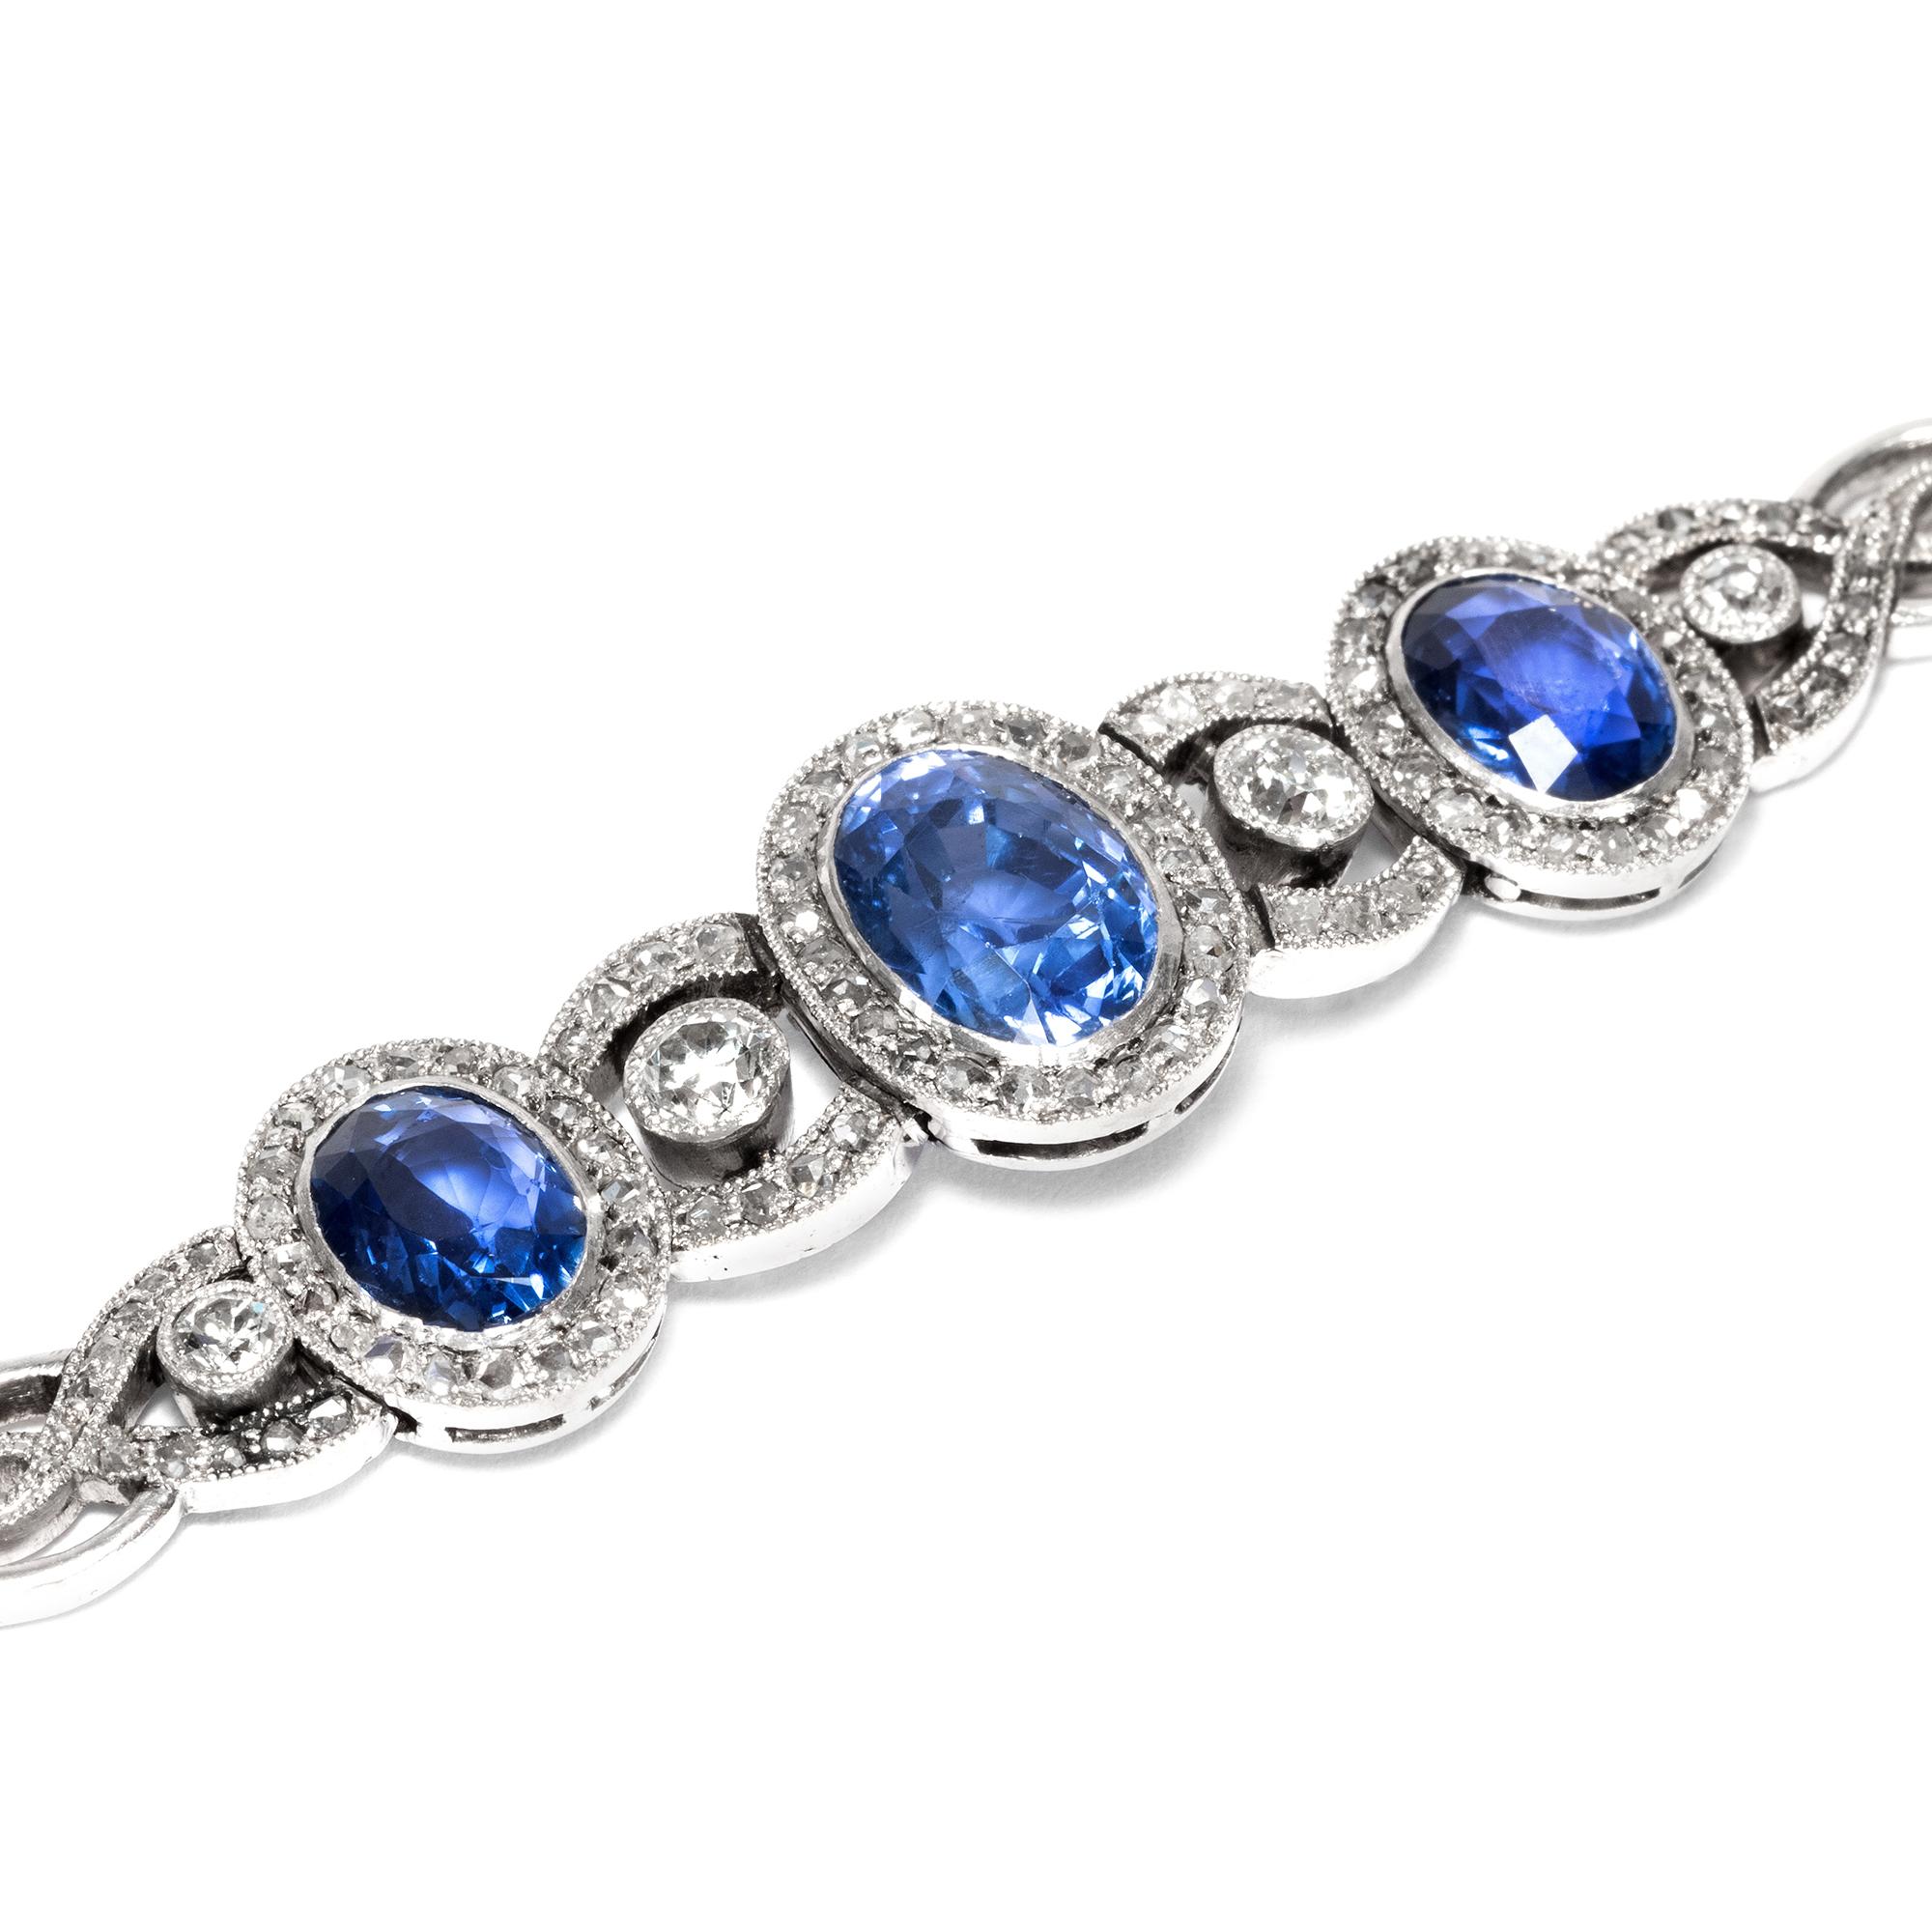 Belle Époque Edwardian circa 1910, Certified Untreated 7.05 Carat Sapphire Diamond Bracelet